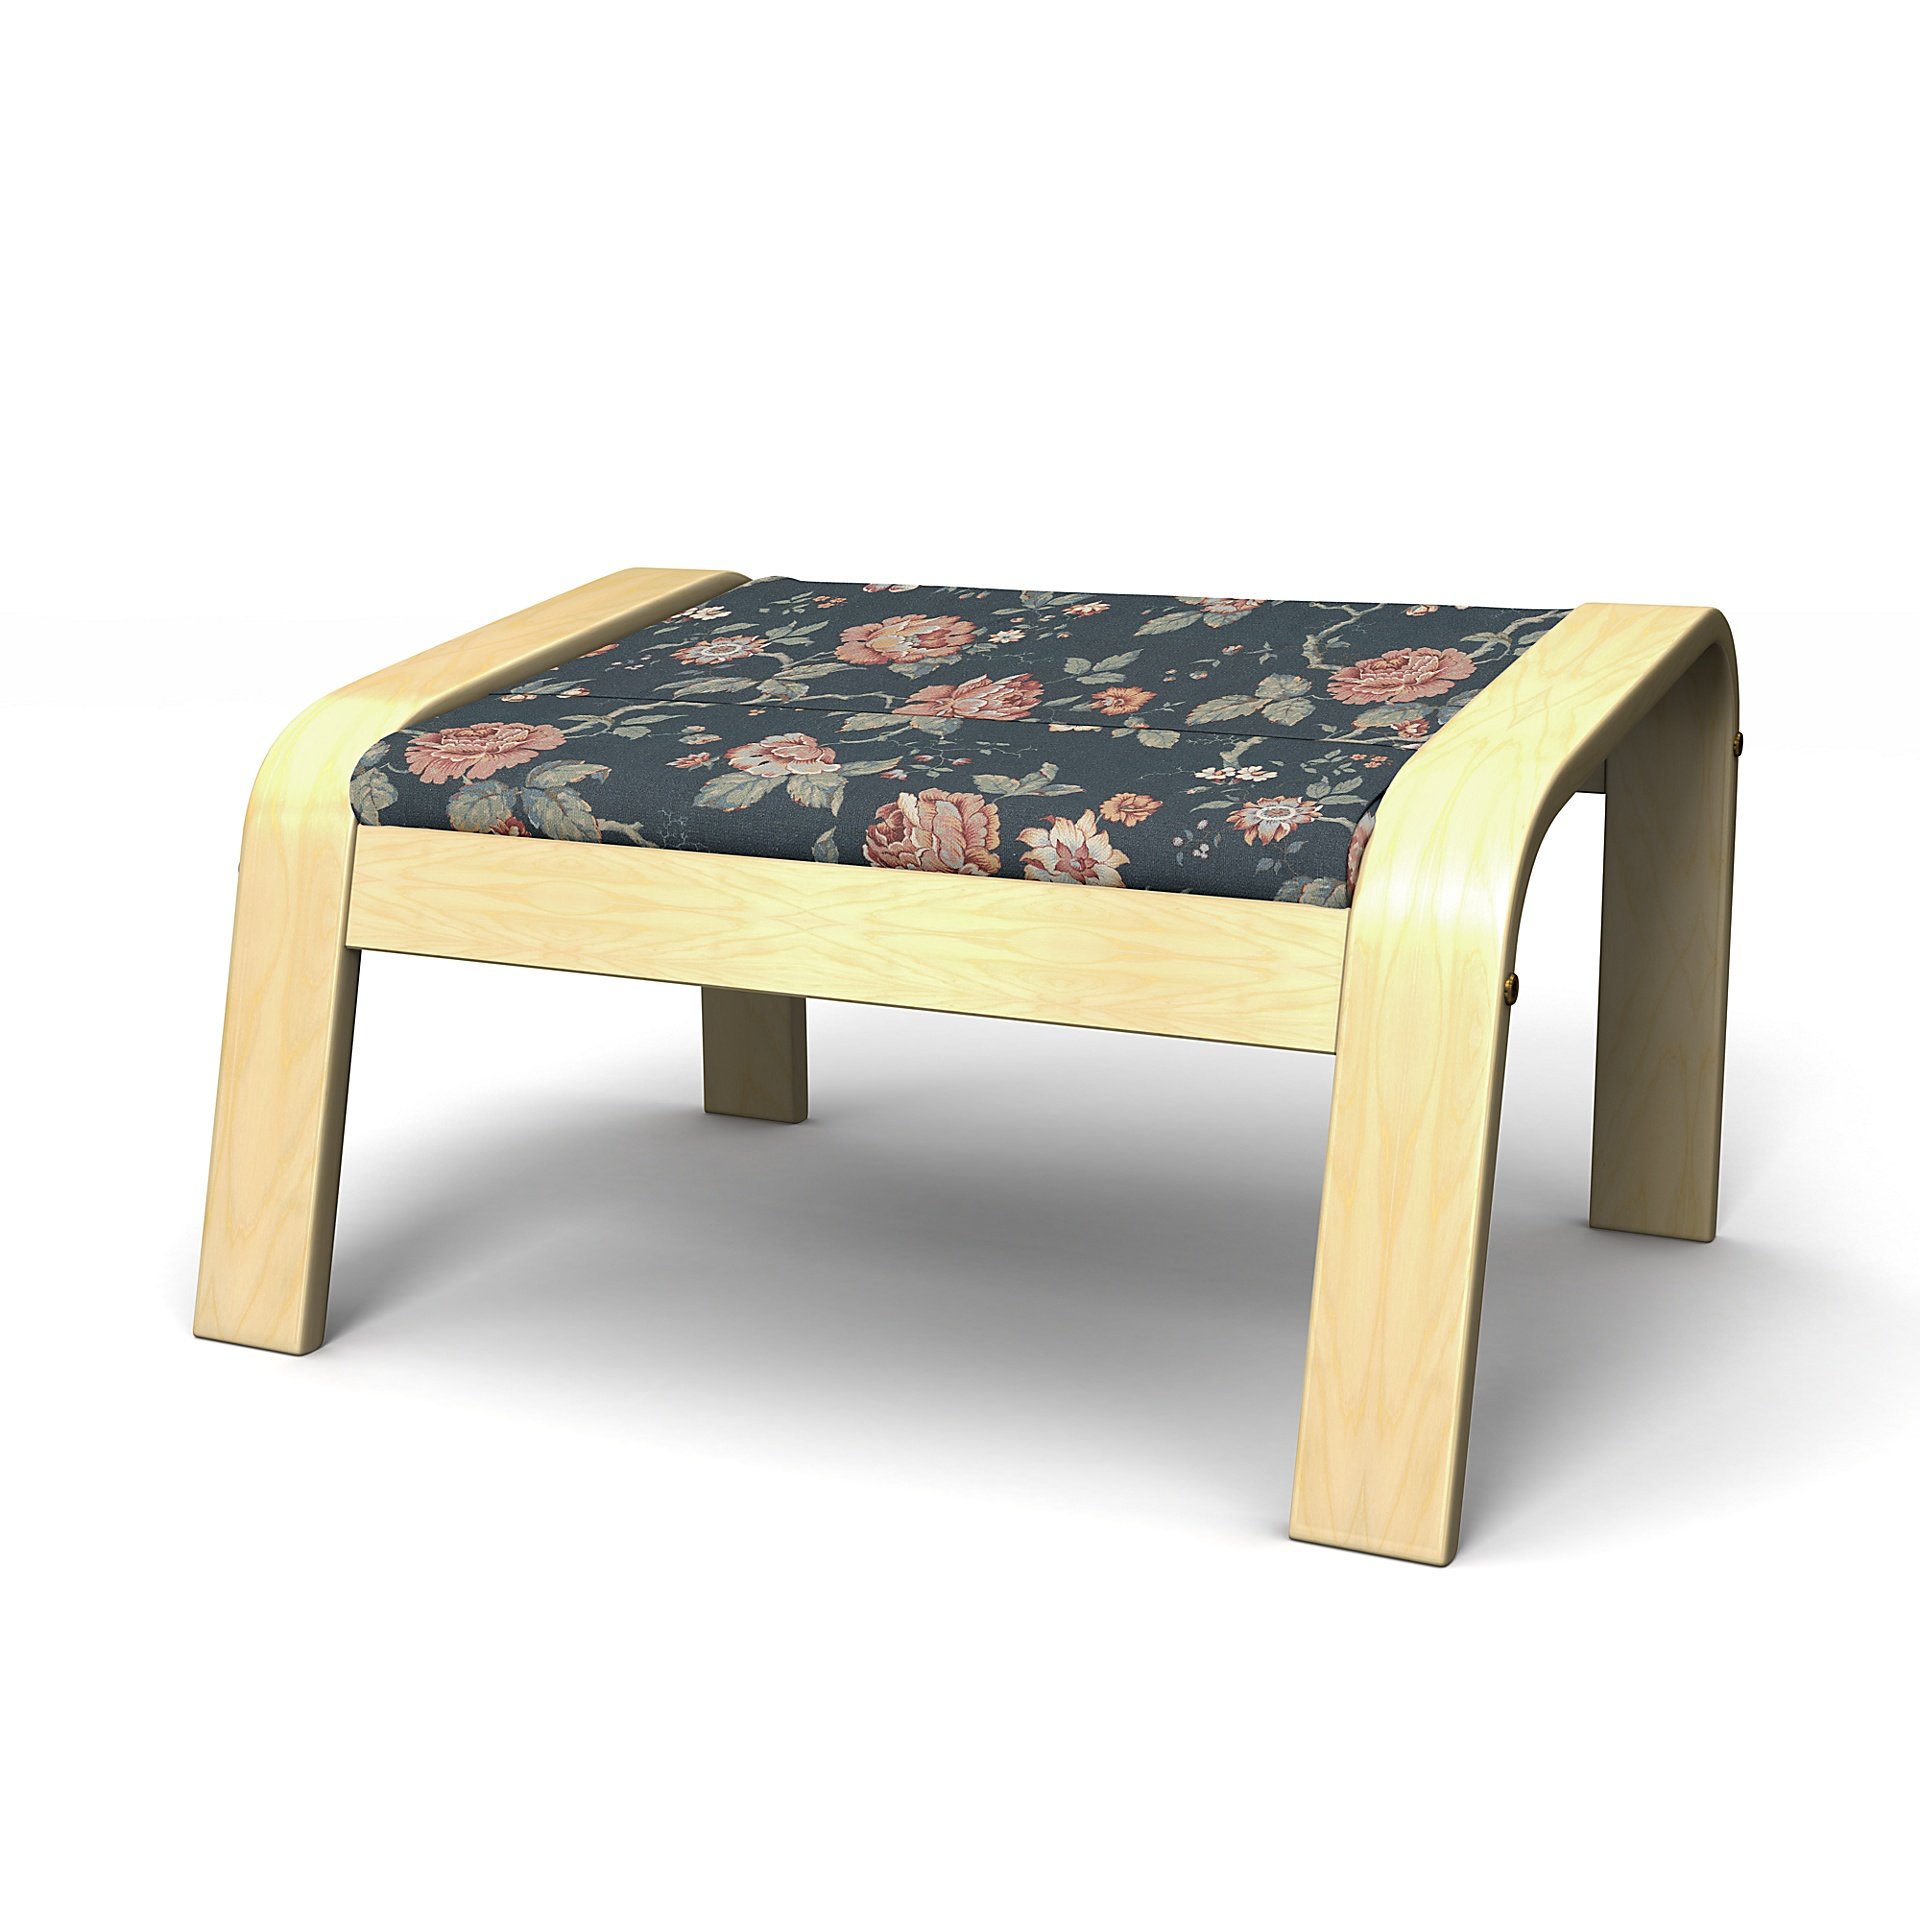 IKEA - Poang Footstool Cover, Rosentrad Dark, BEMZ x BORASTAPETER COLLECTION - Bemz